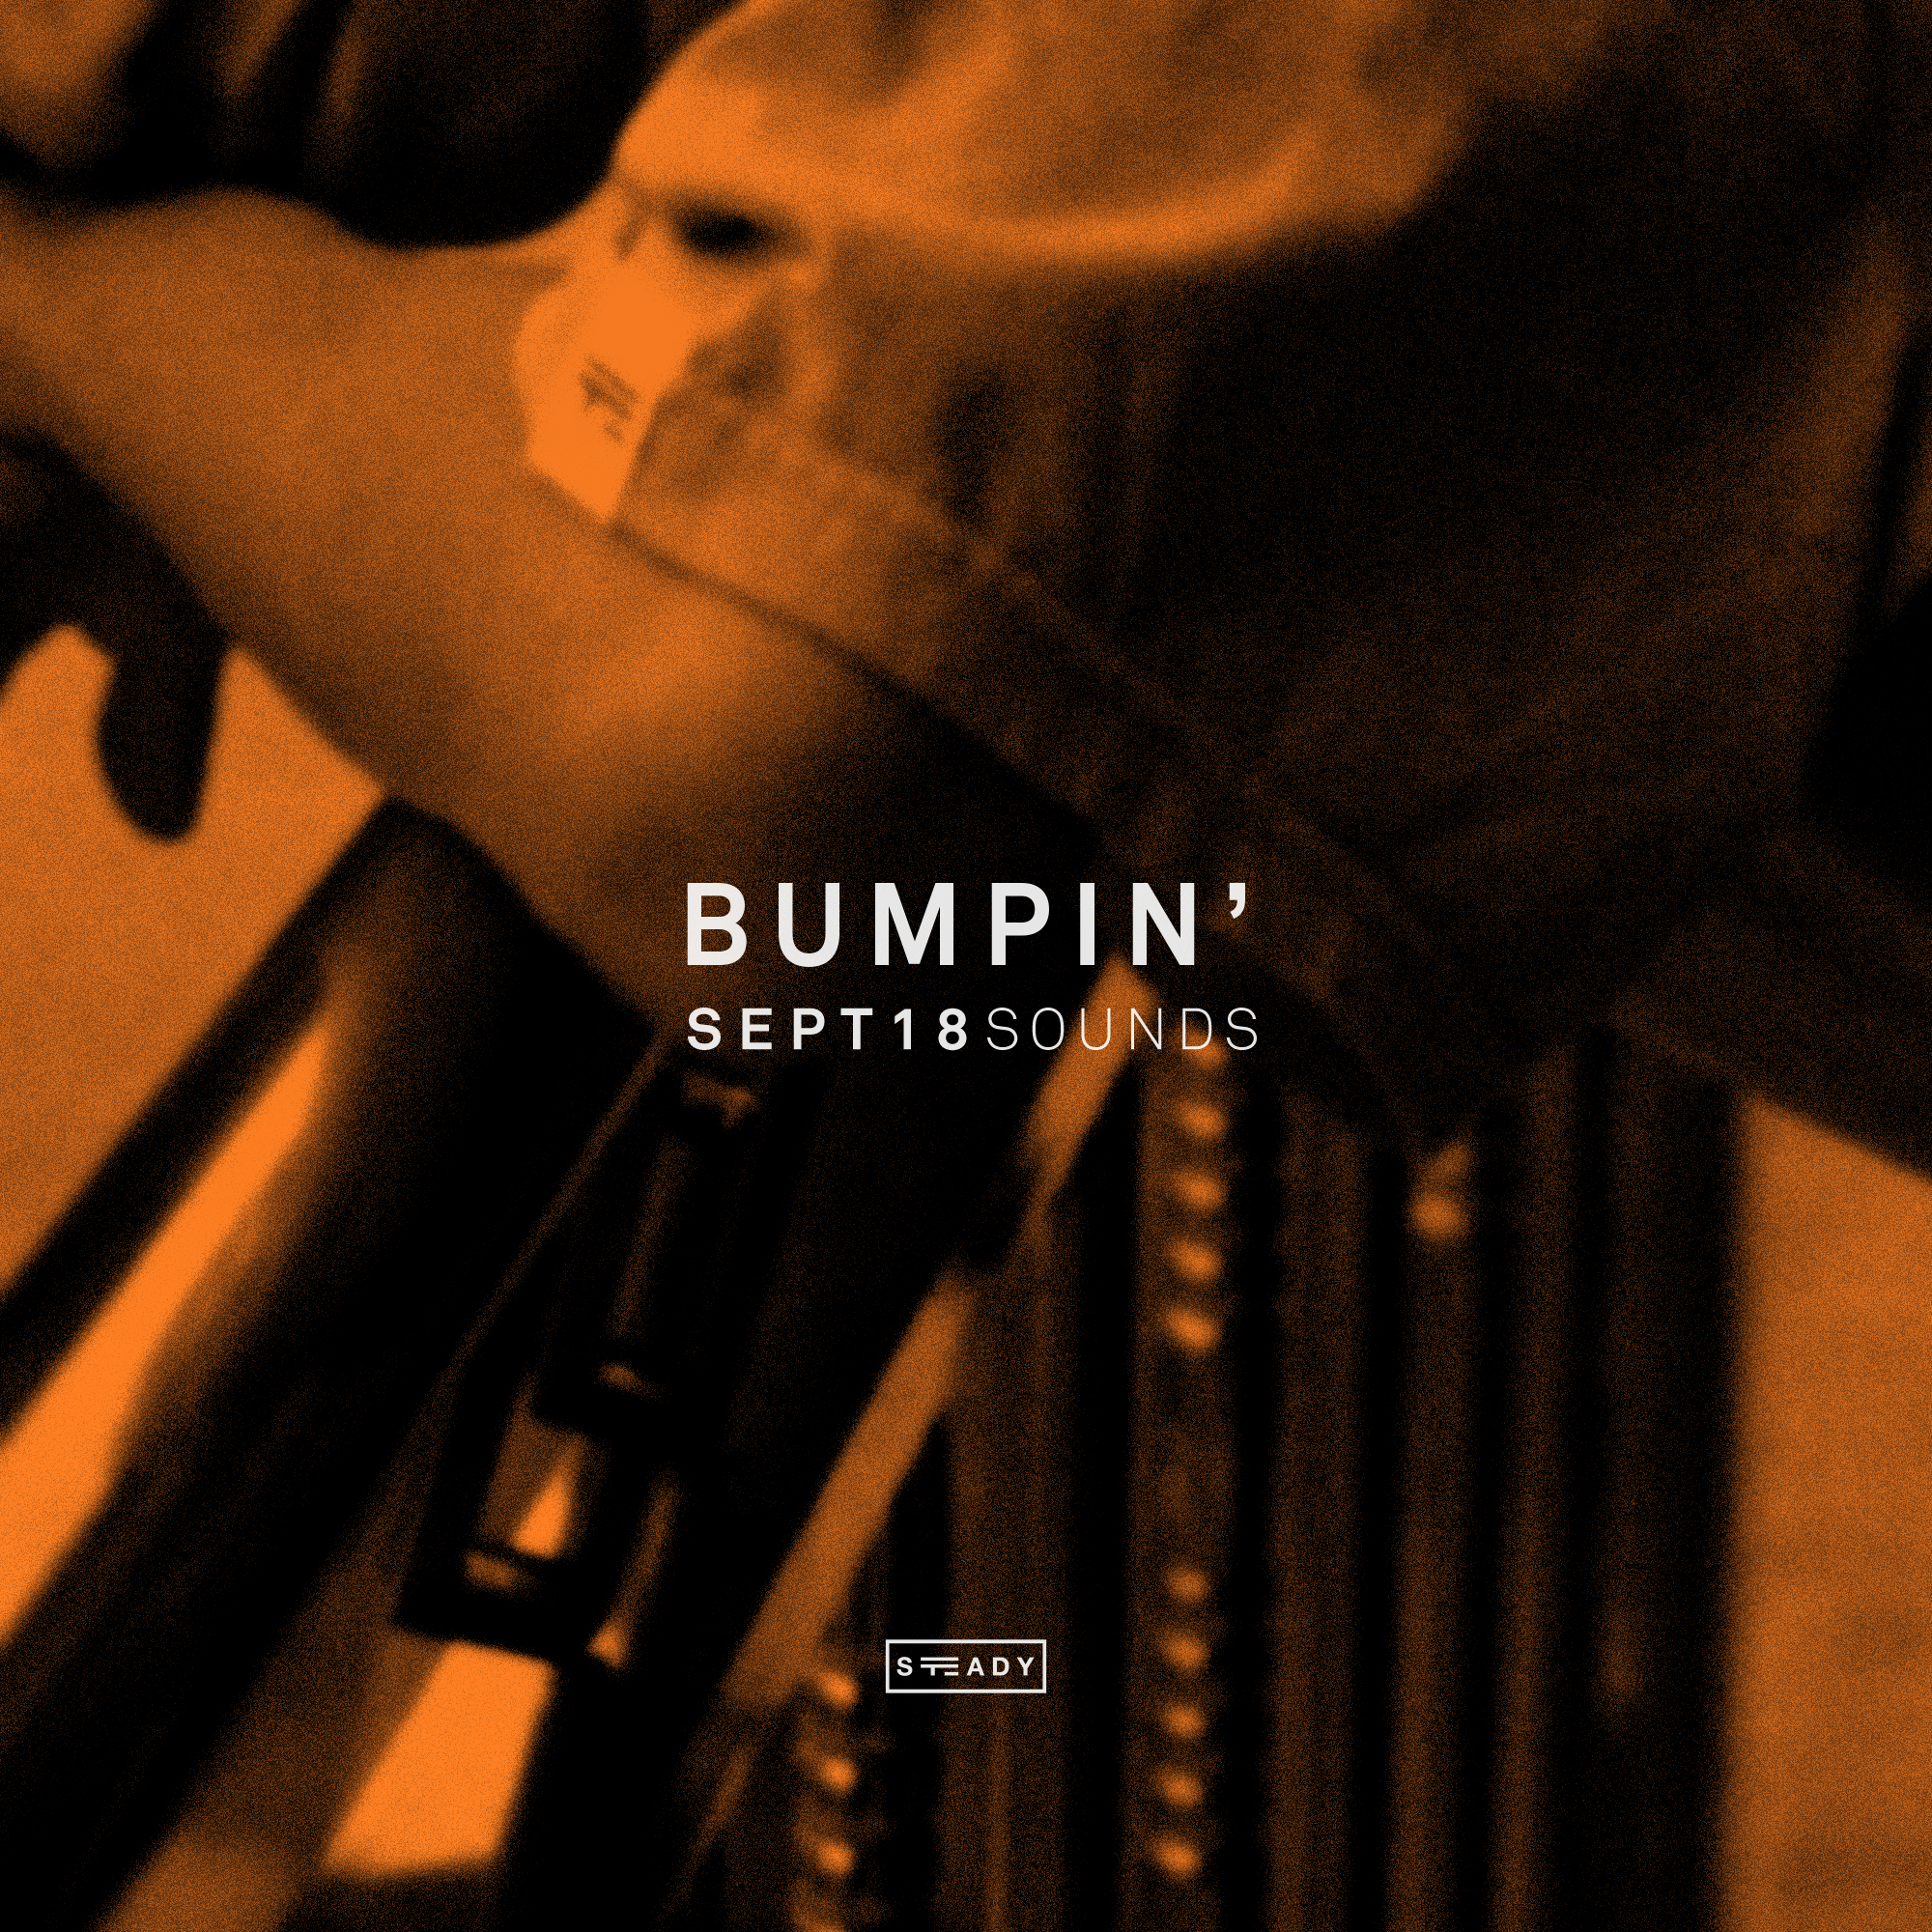 STEADY BUMPIN’: SEPT18 SOUNDS